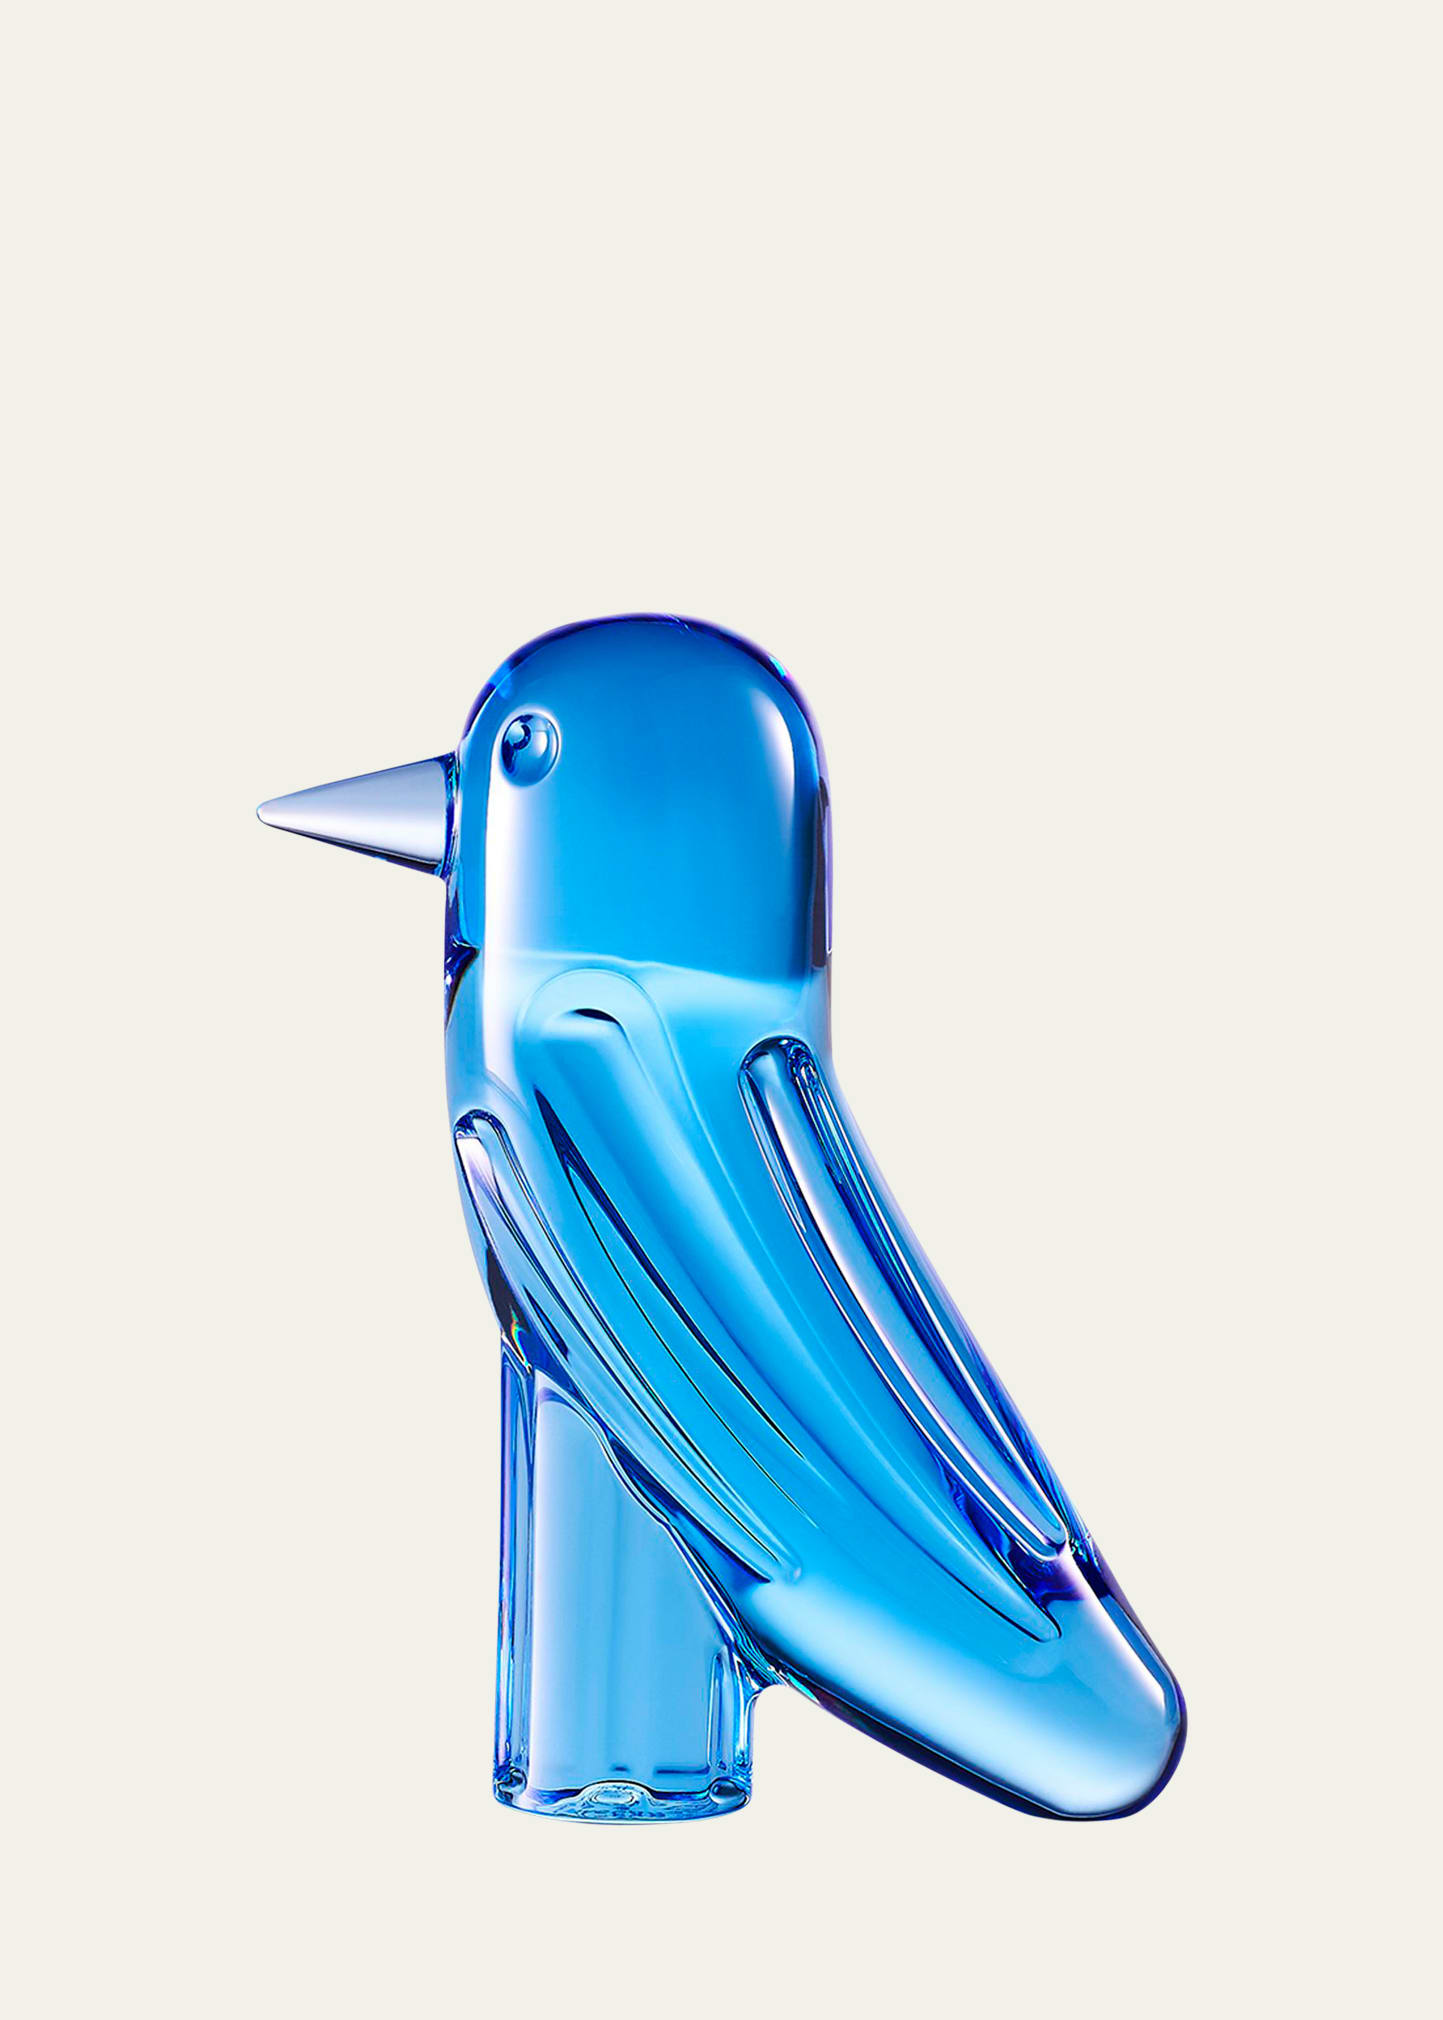 Faunacrystopolis Blue Bird by Jaime Hayon